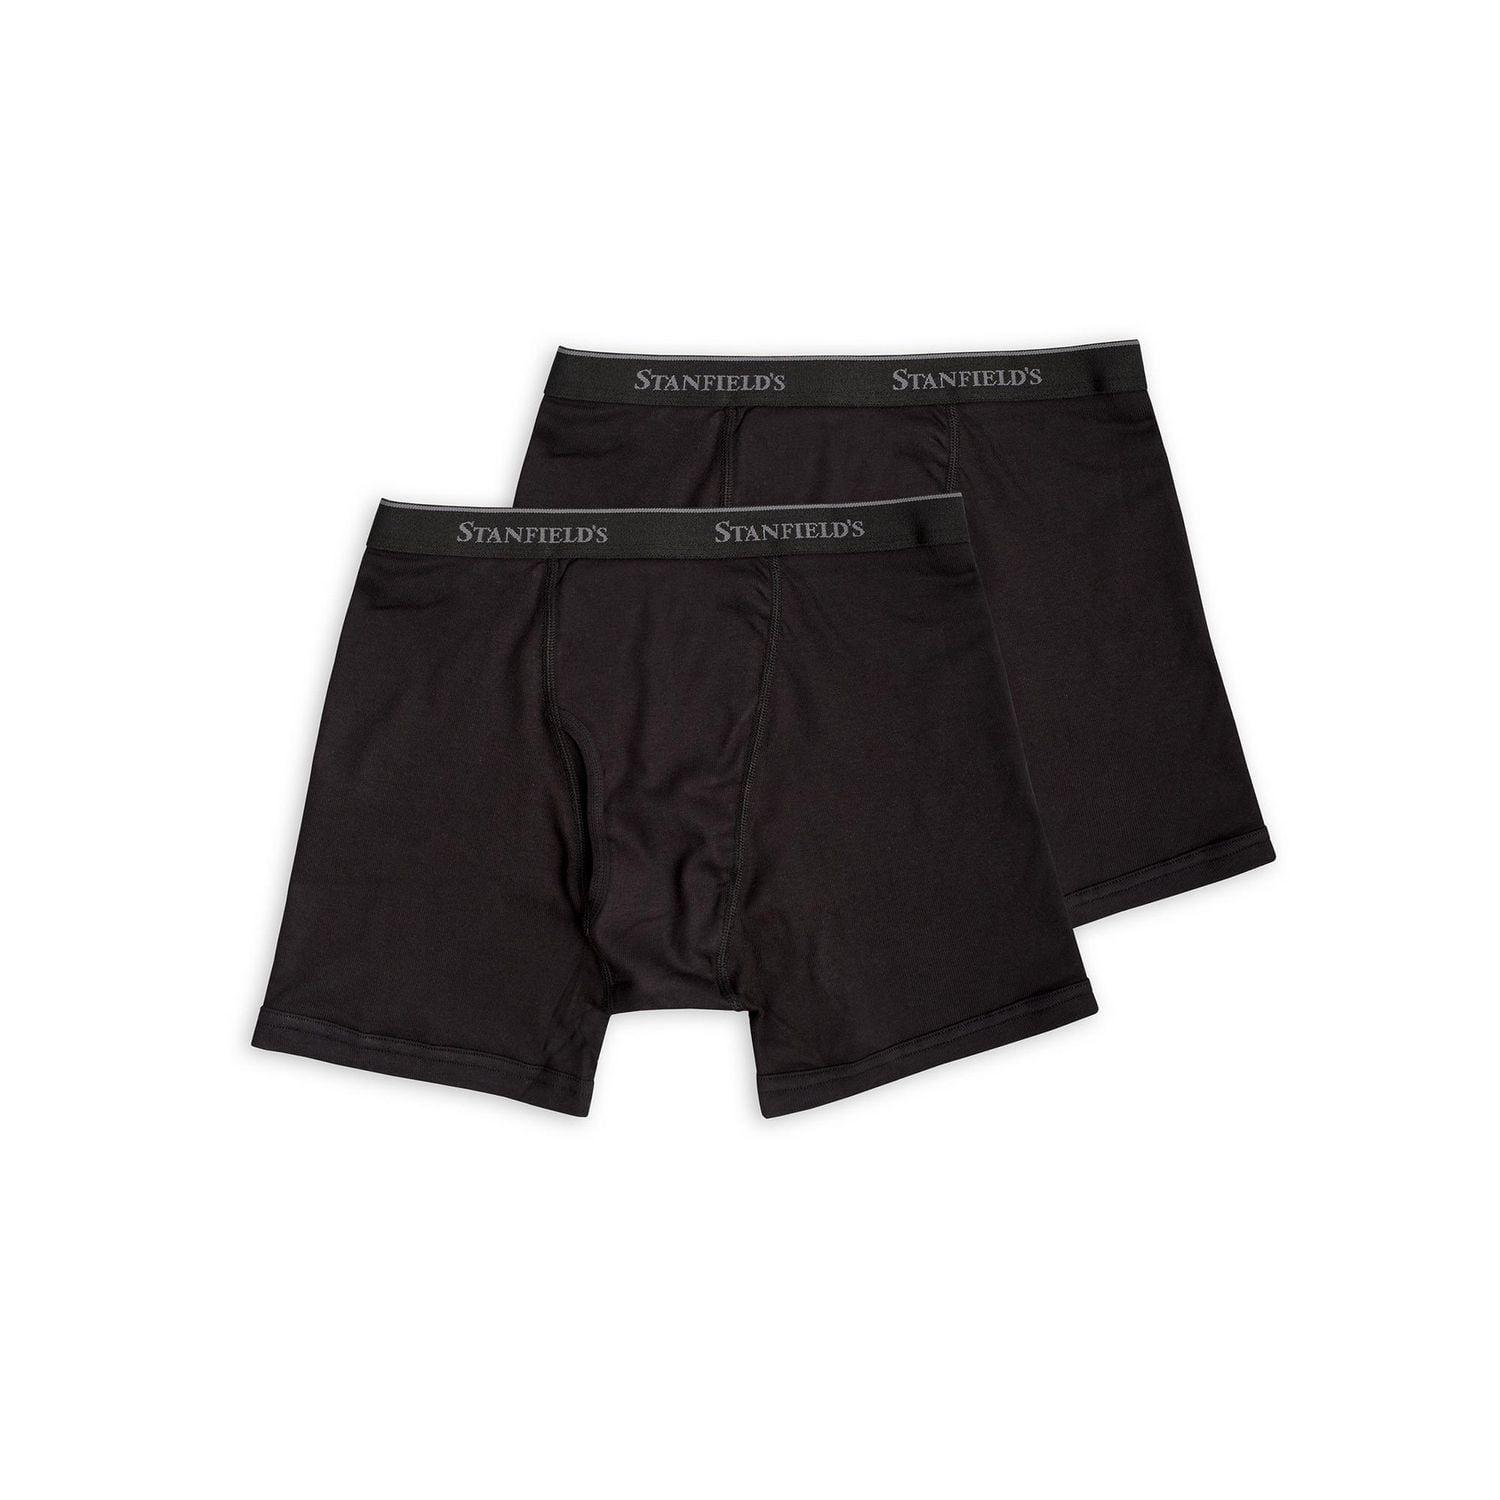 6 PACK Men's Boxer Briefs Underwear 100% Cotton Trunk Shorts Black Gray Lot  S-3X